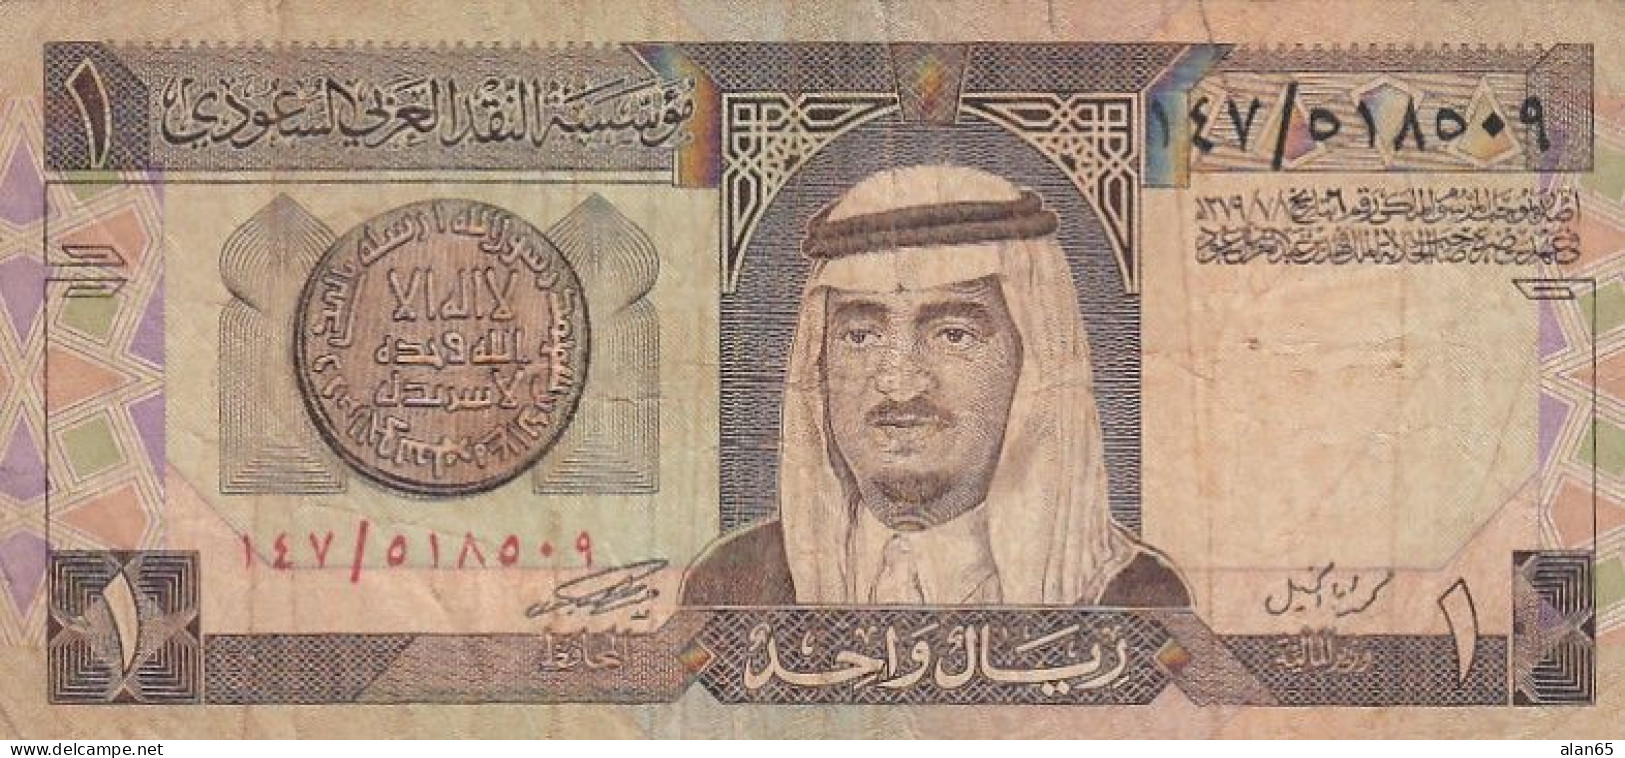 Saudi Arabia Lot Of 2, #21b 1 Riyal 1984 Banknote And #22a 5 Riyal 1983 Banknote - Arabie Saoudite